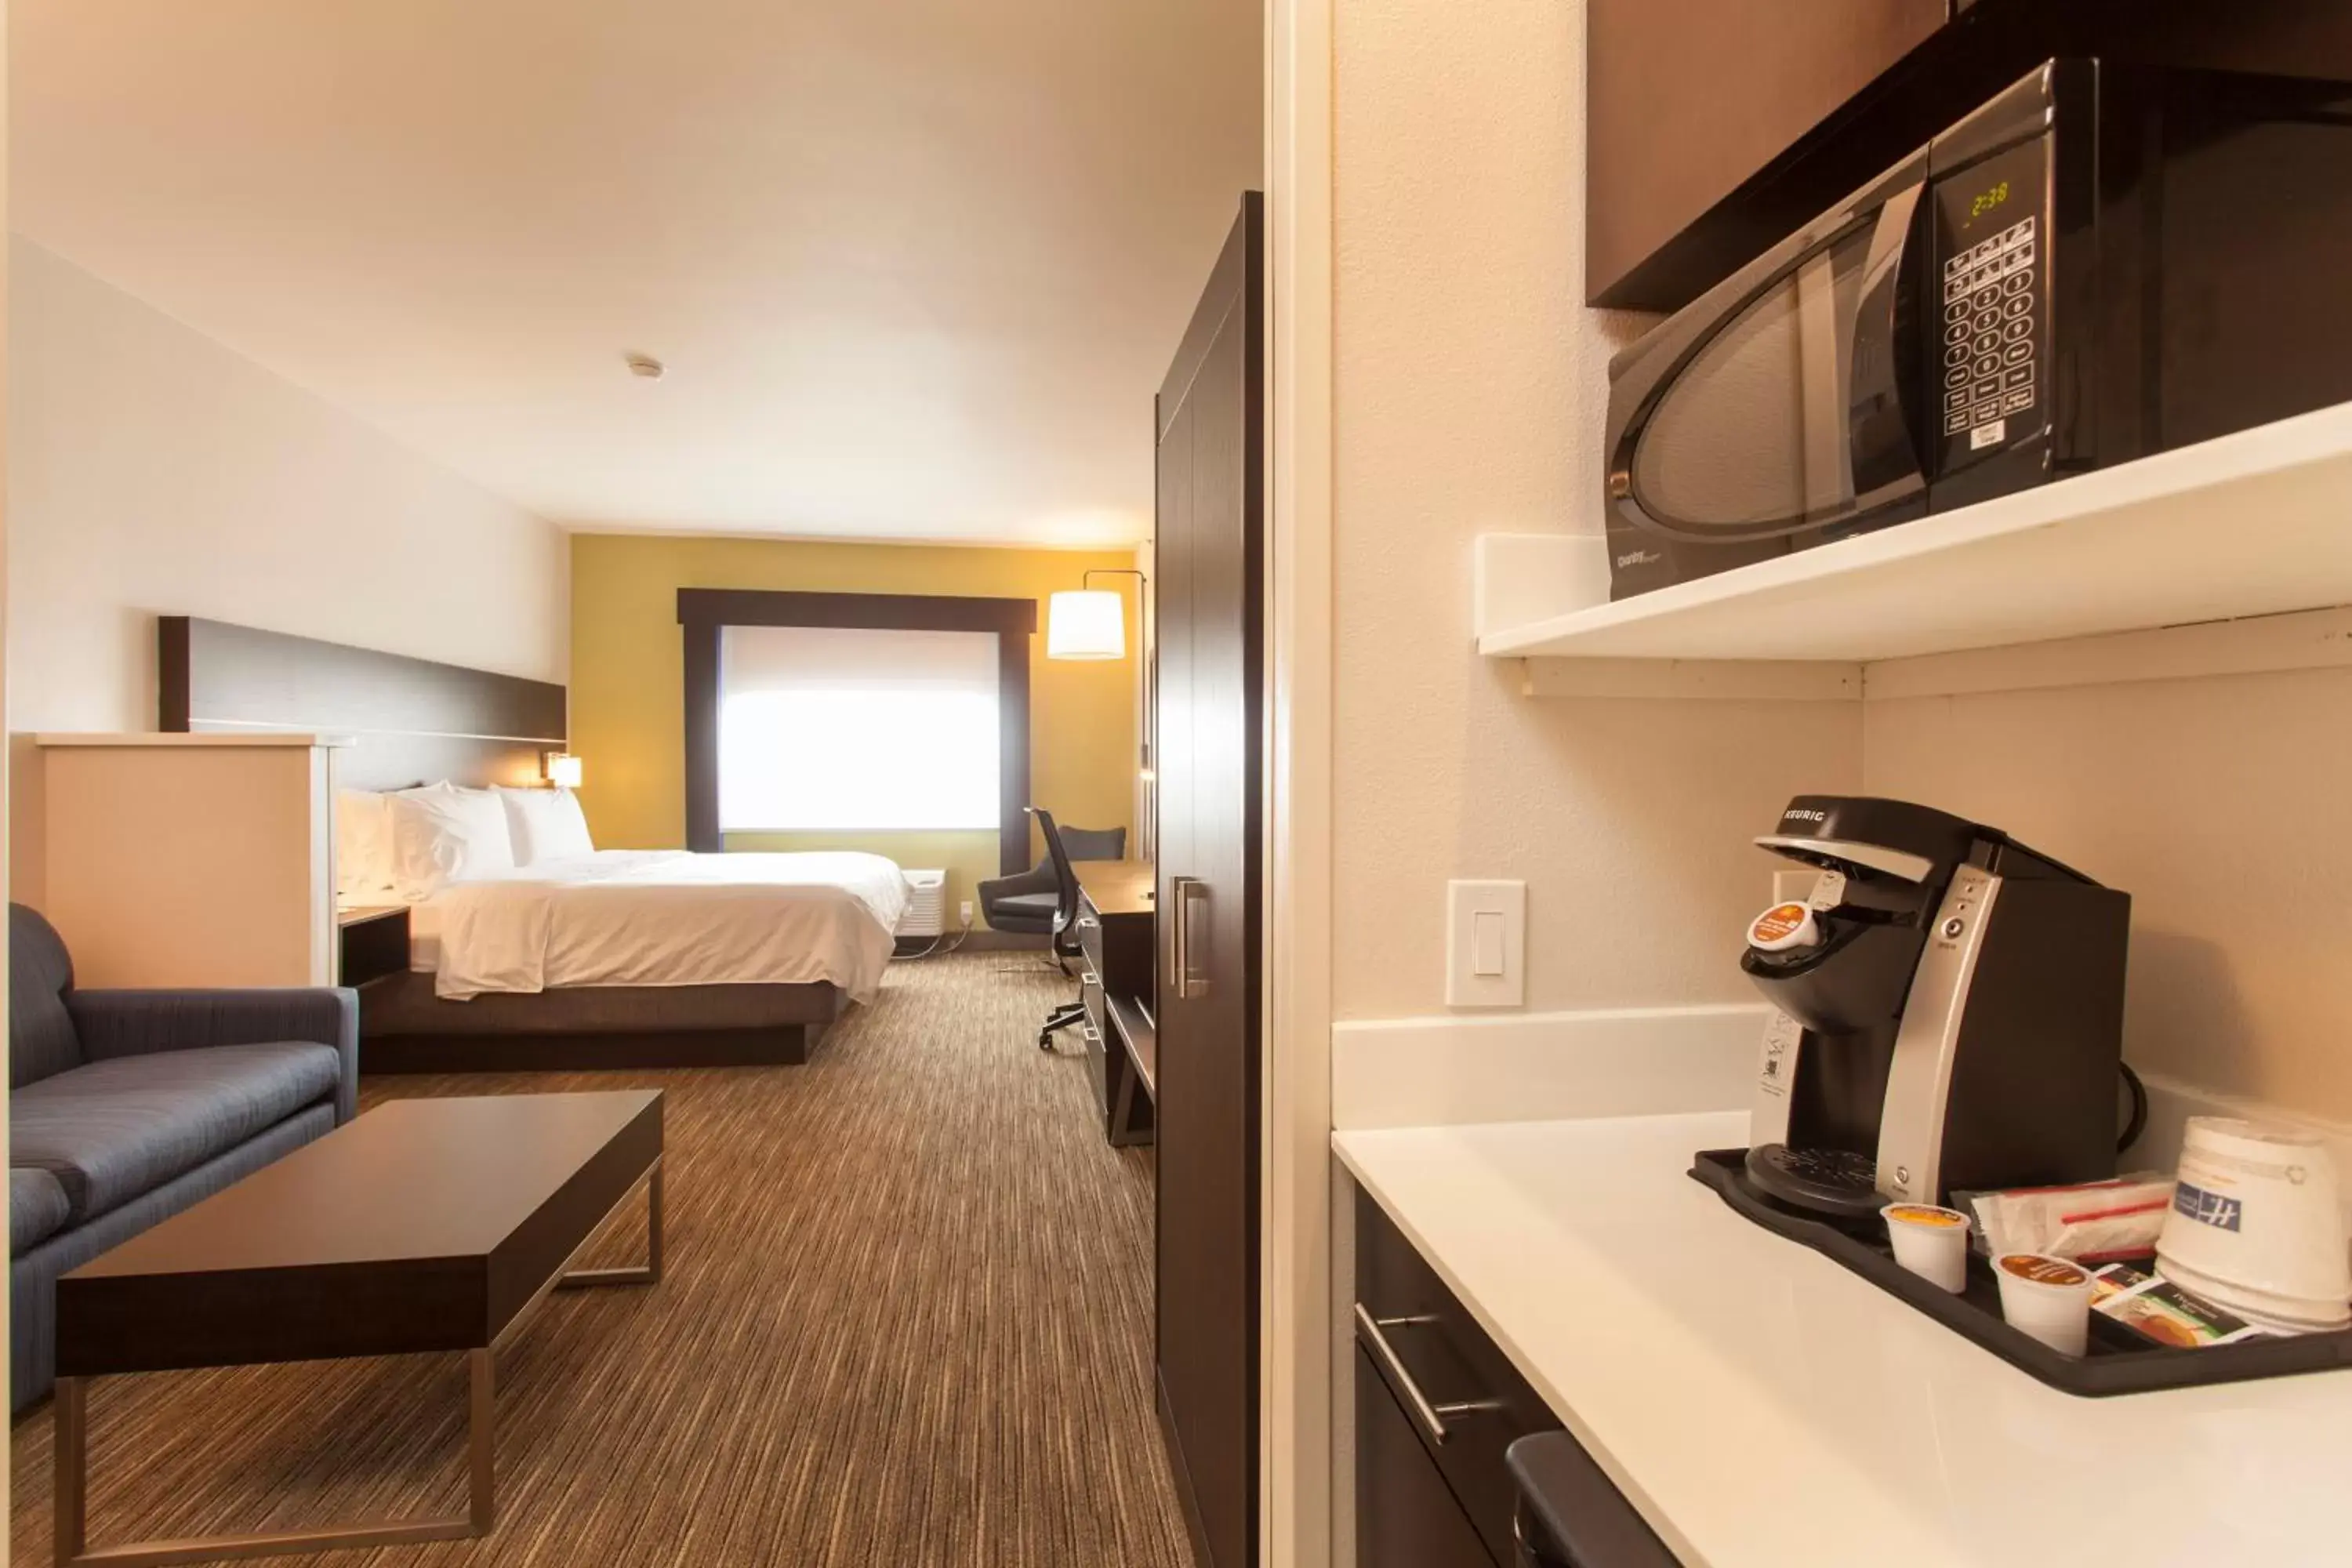 Holiday Inn Express & Suites - Santa Fe, an IHG Hotel